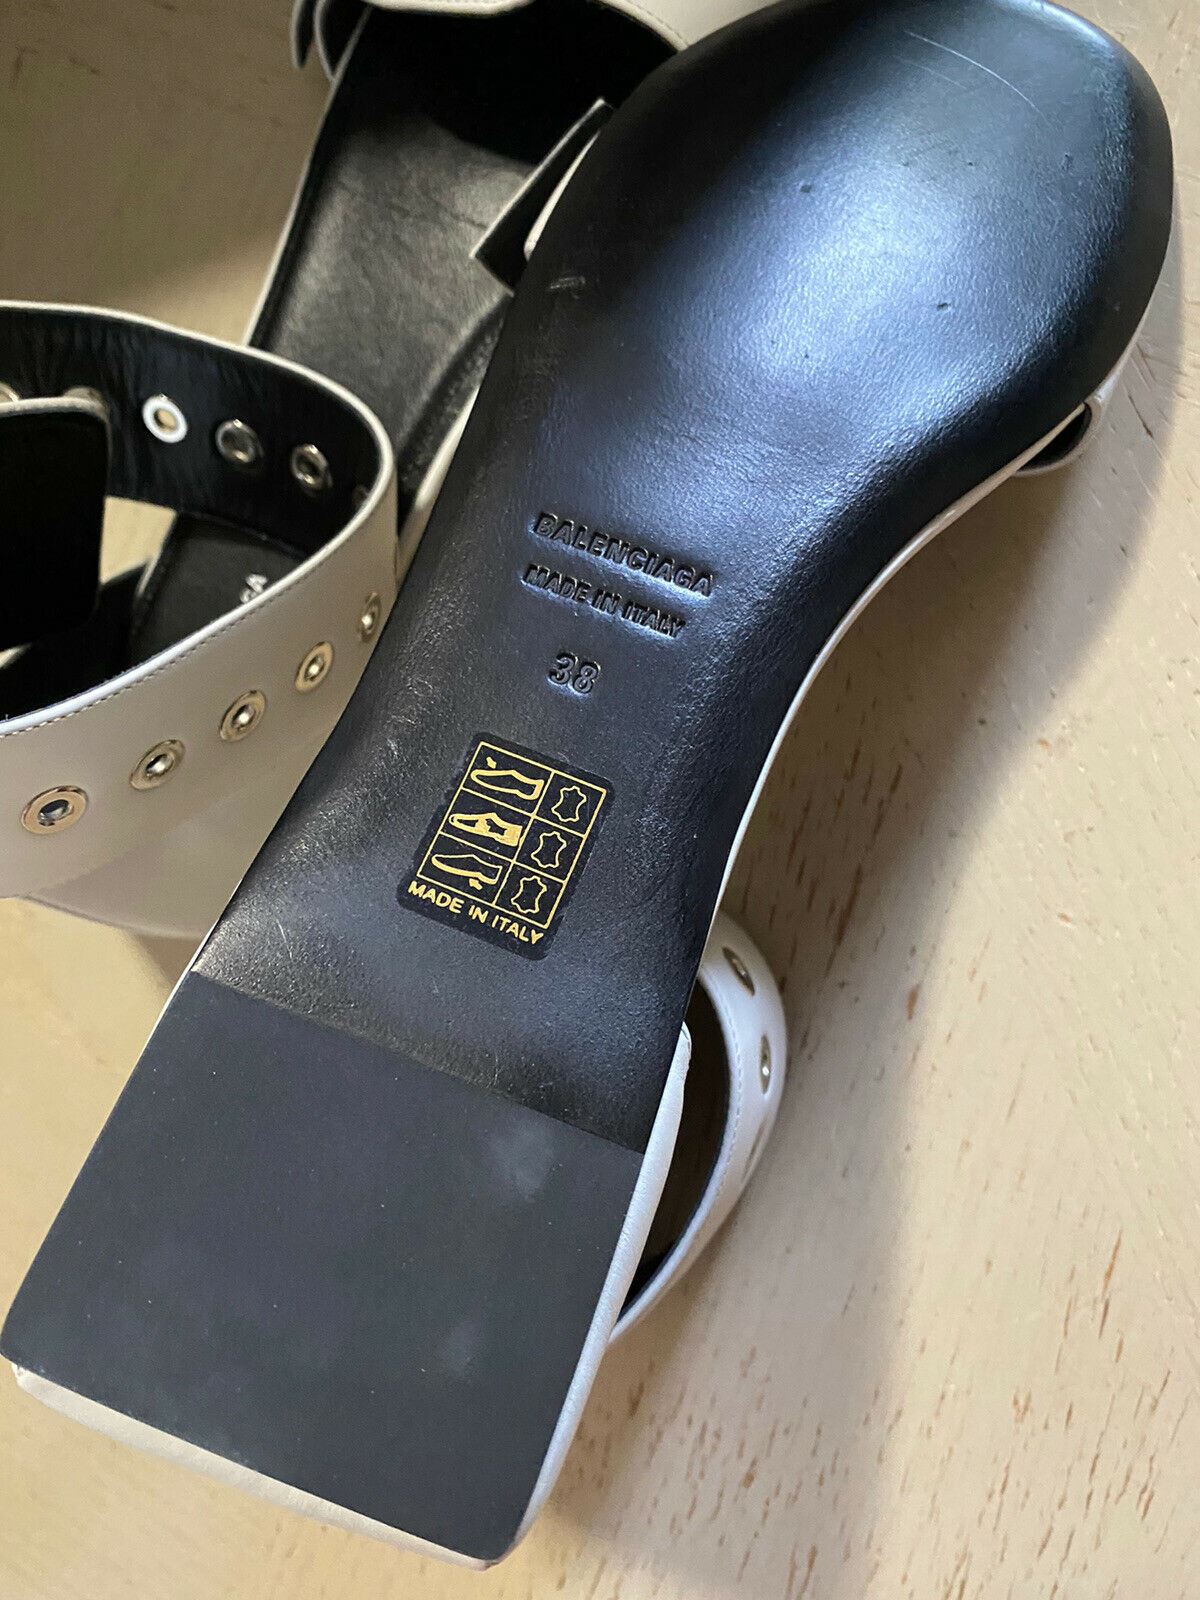 NIB $950 Balenciaga Женские сандалии на плоской подошве с ремнем, белые 8 США (38 ЕС) Италия